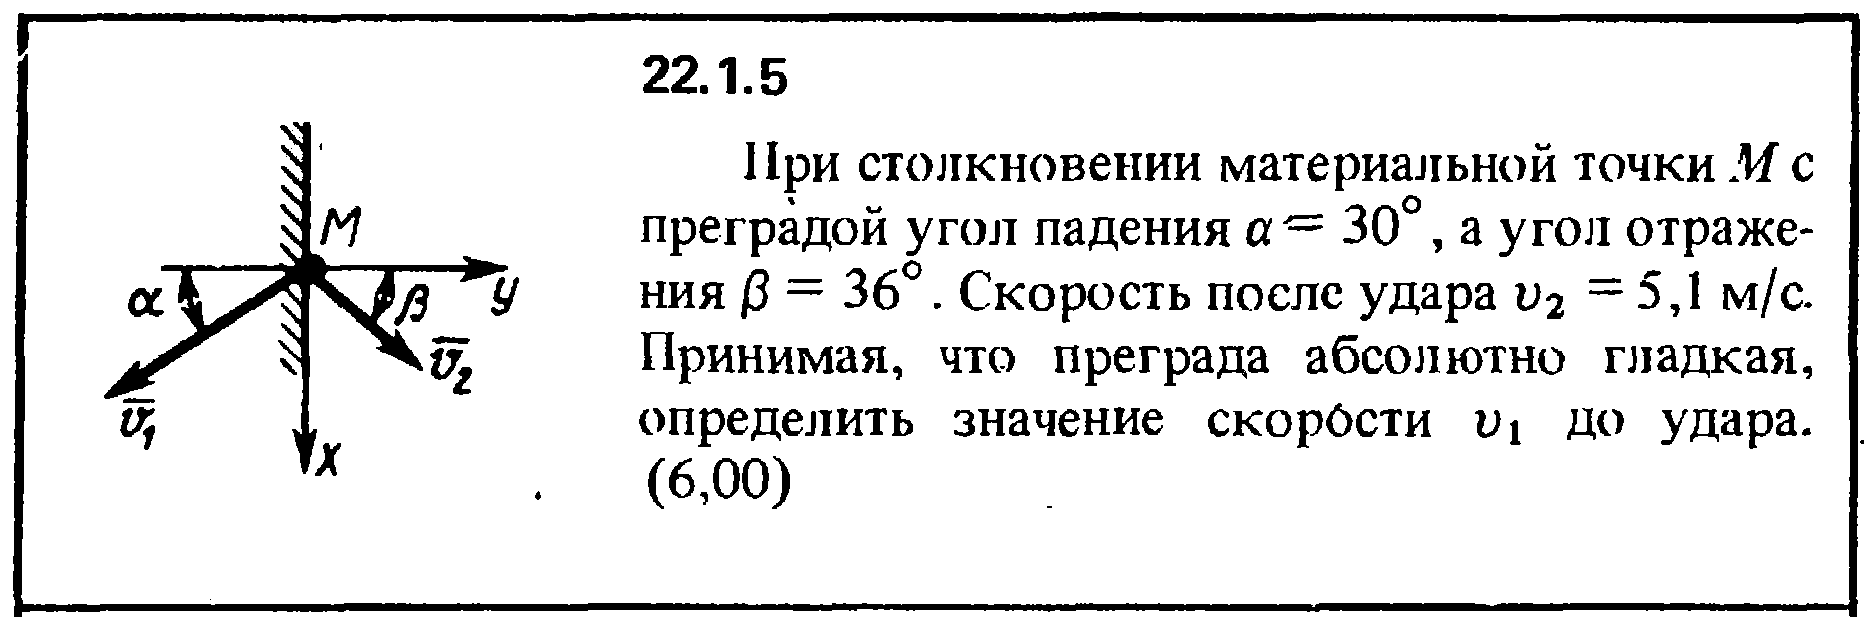 Решение 22.1.5 из сборника (решебника) Кепе О.Е. 1989